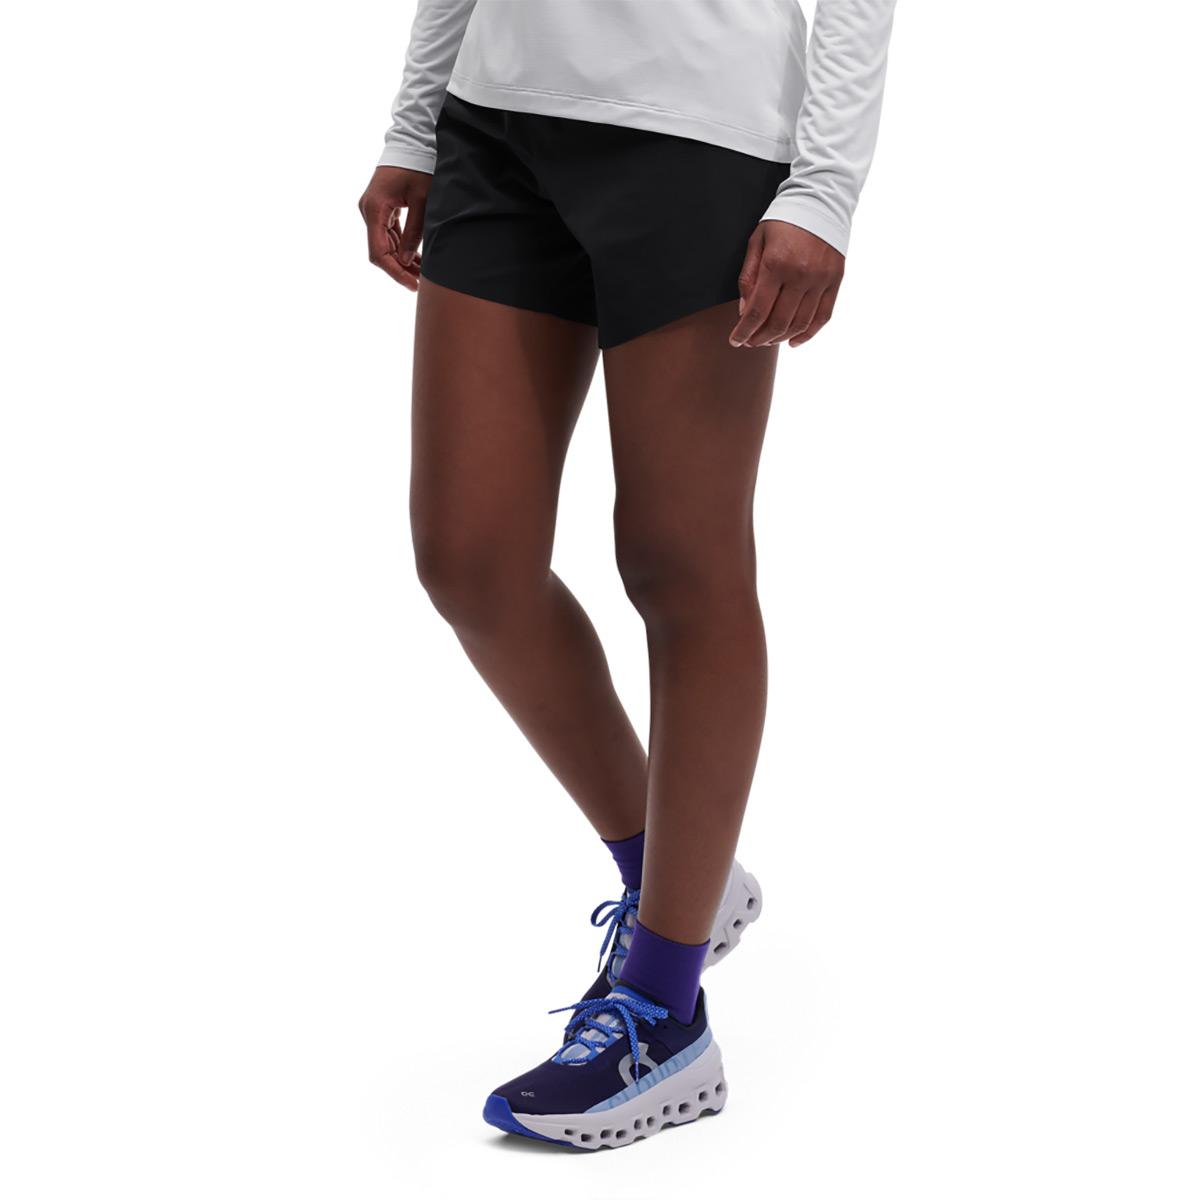 On Womens 5 Running Shorts - Black